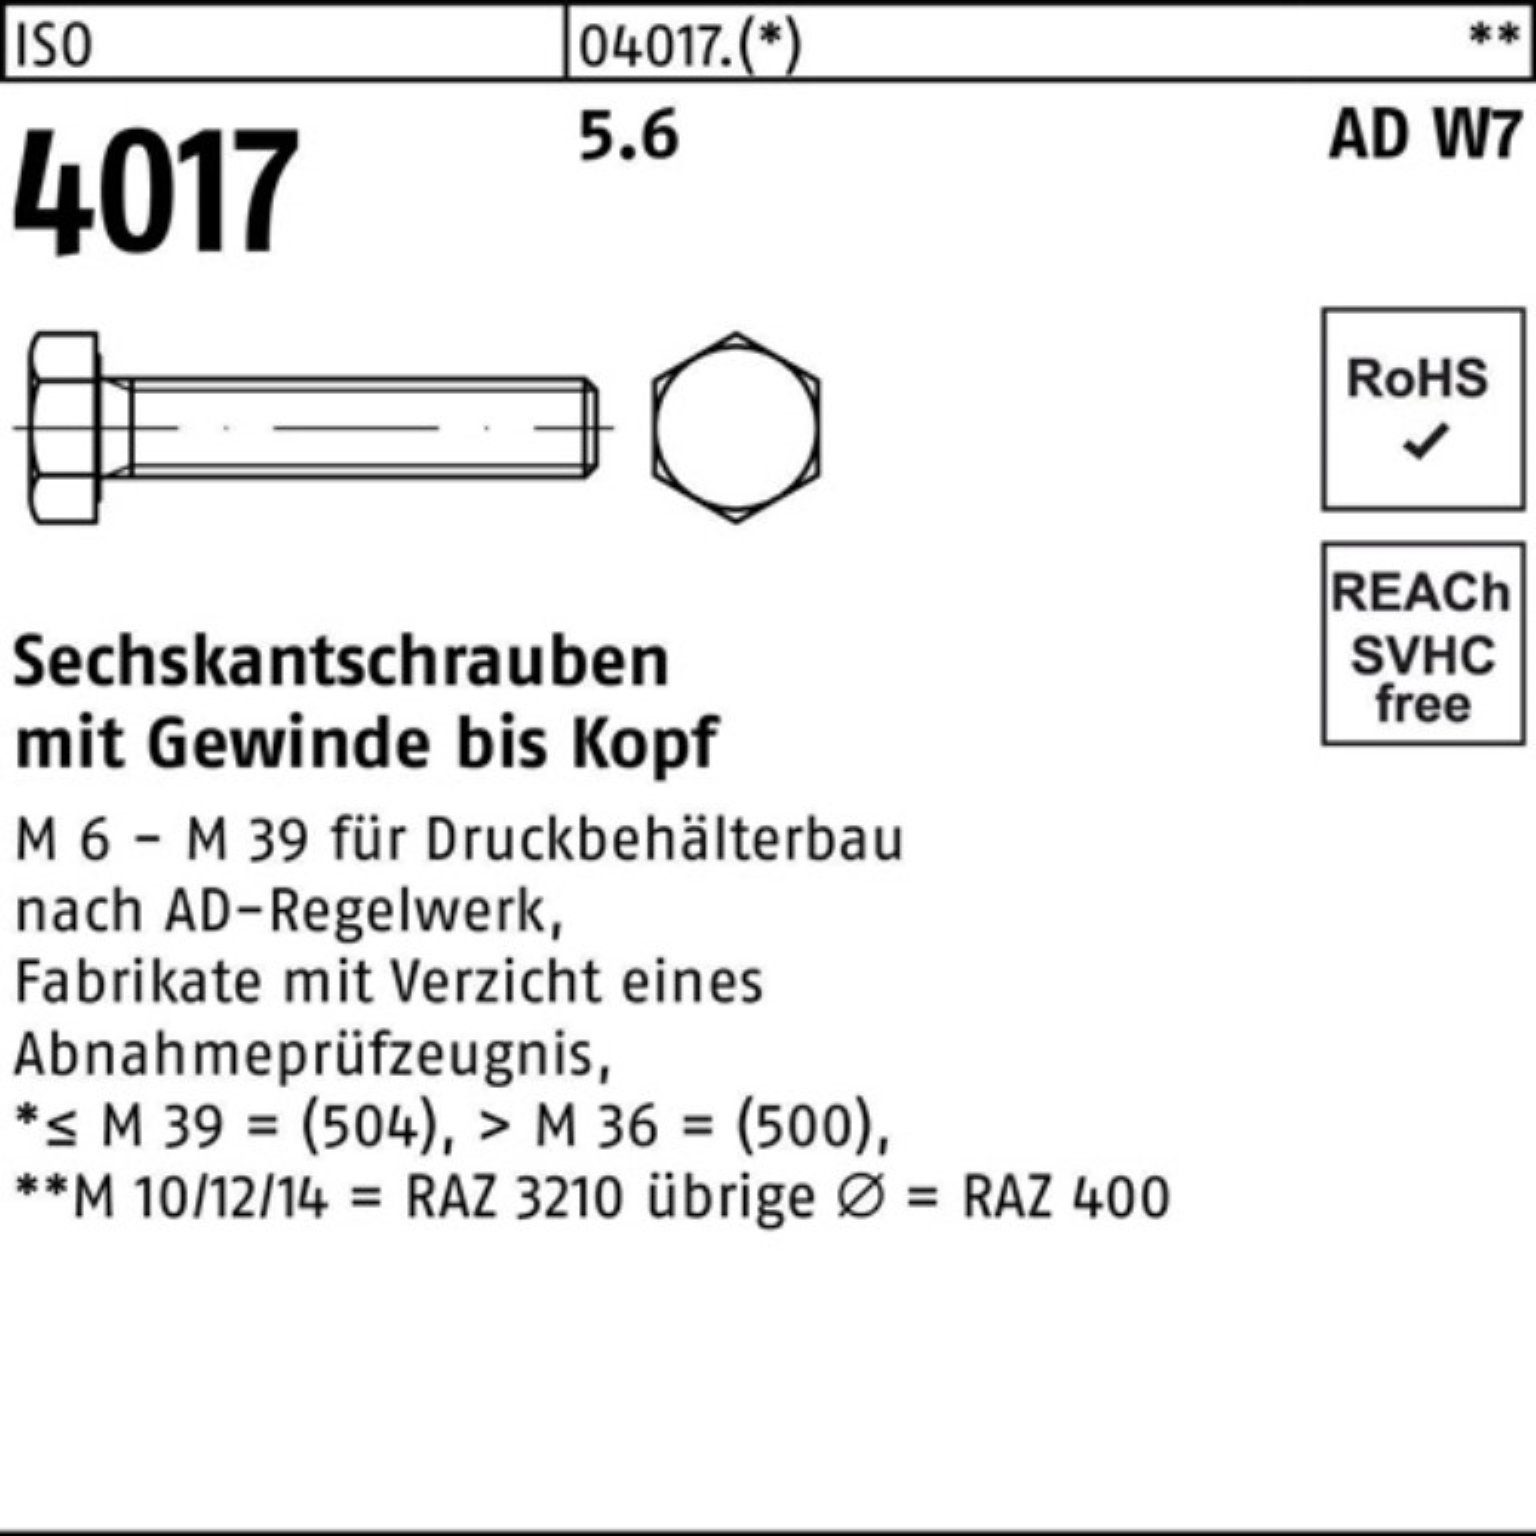 Bufab Sechskantschraube 100er Pack Sechskantschraube ISO 4017 VG M12x 100 5.6 AD W7 50 Stück